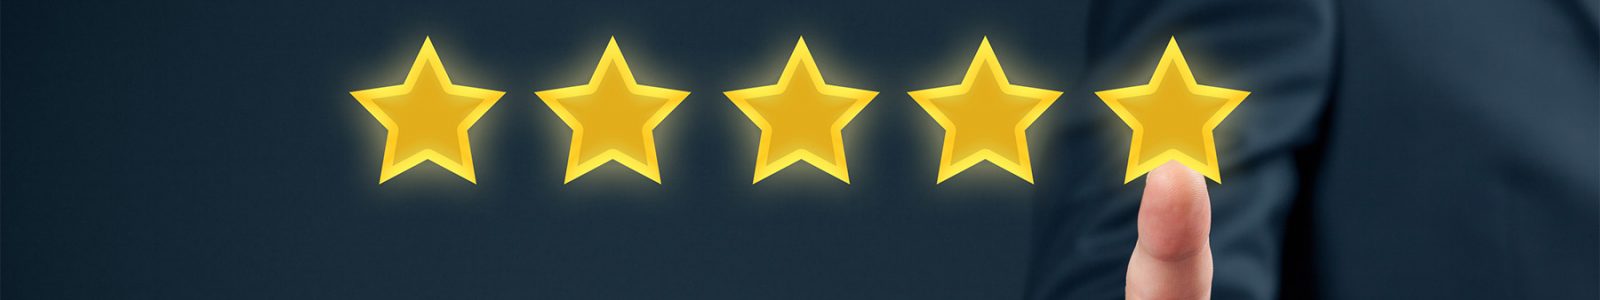 Customer Five Star Reviews Contractor